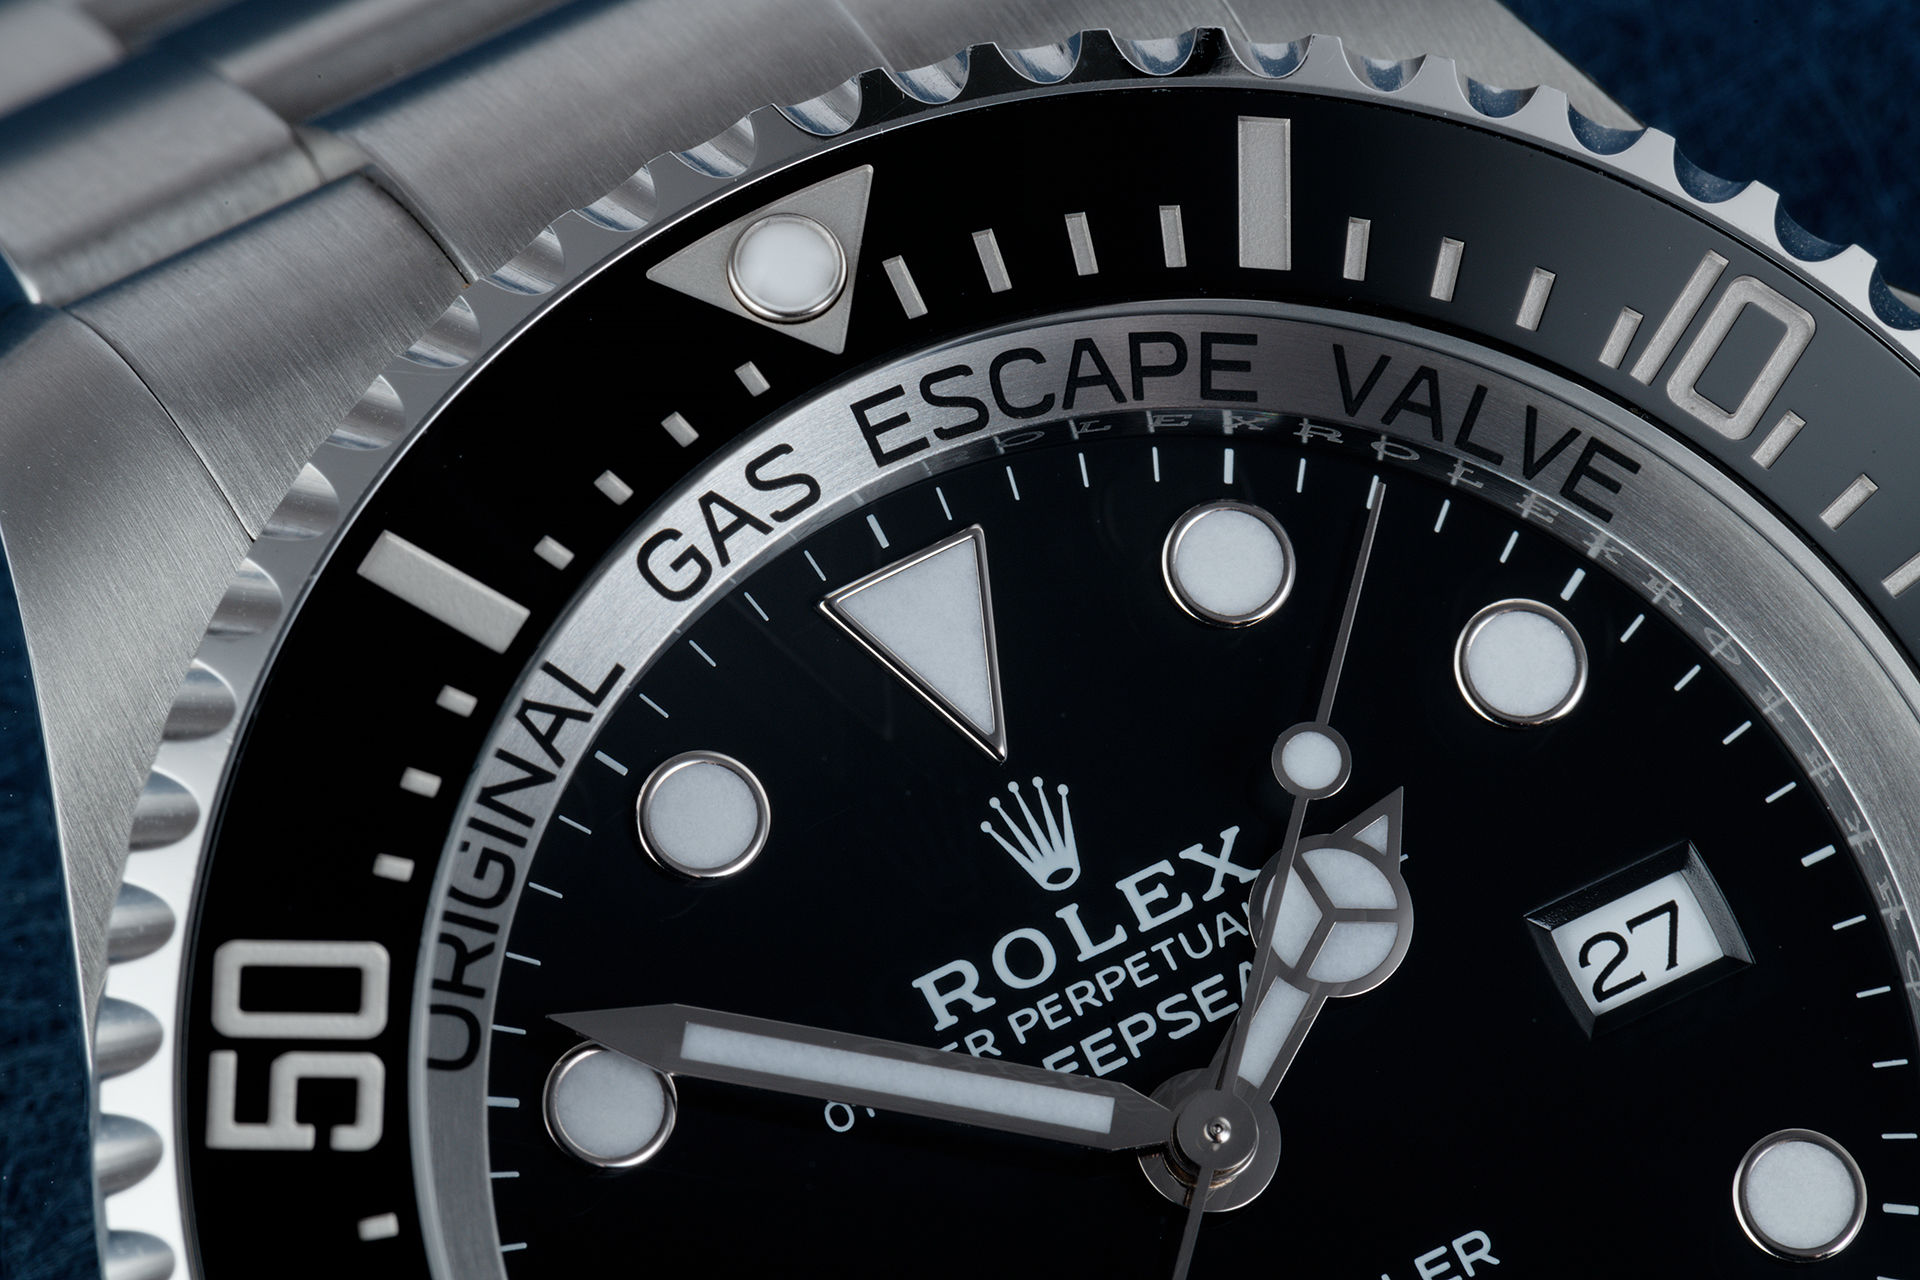 ref 126660 | Brand New '3235 Calibre'  | Rolex Sea-Dweller Deepsea